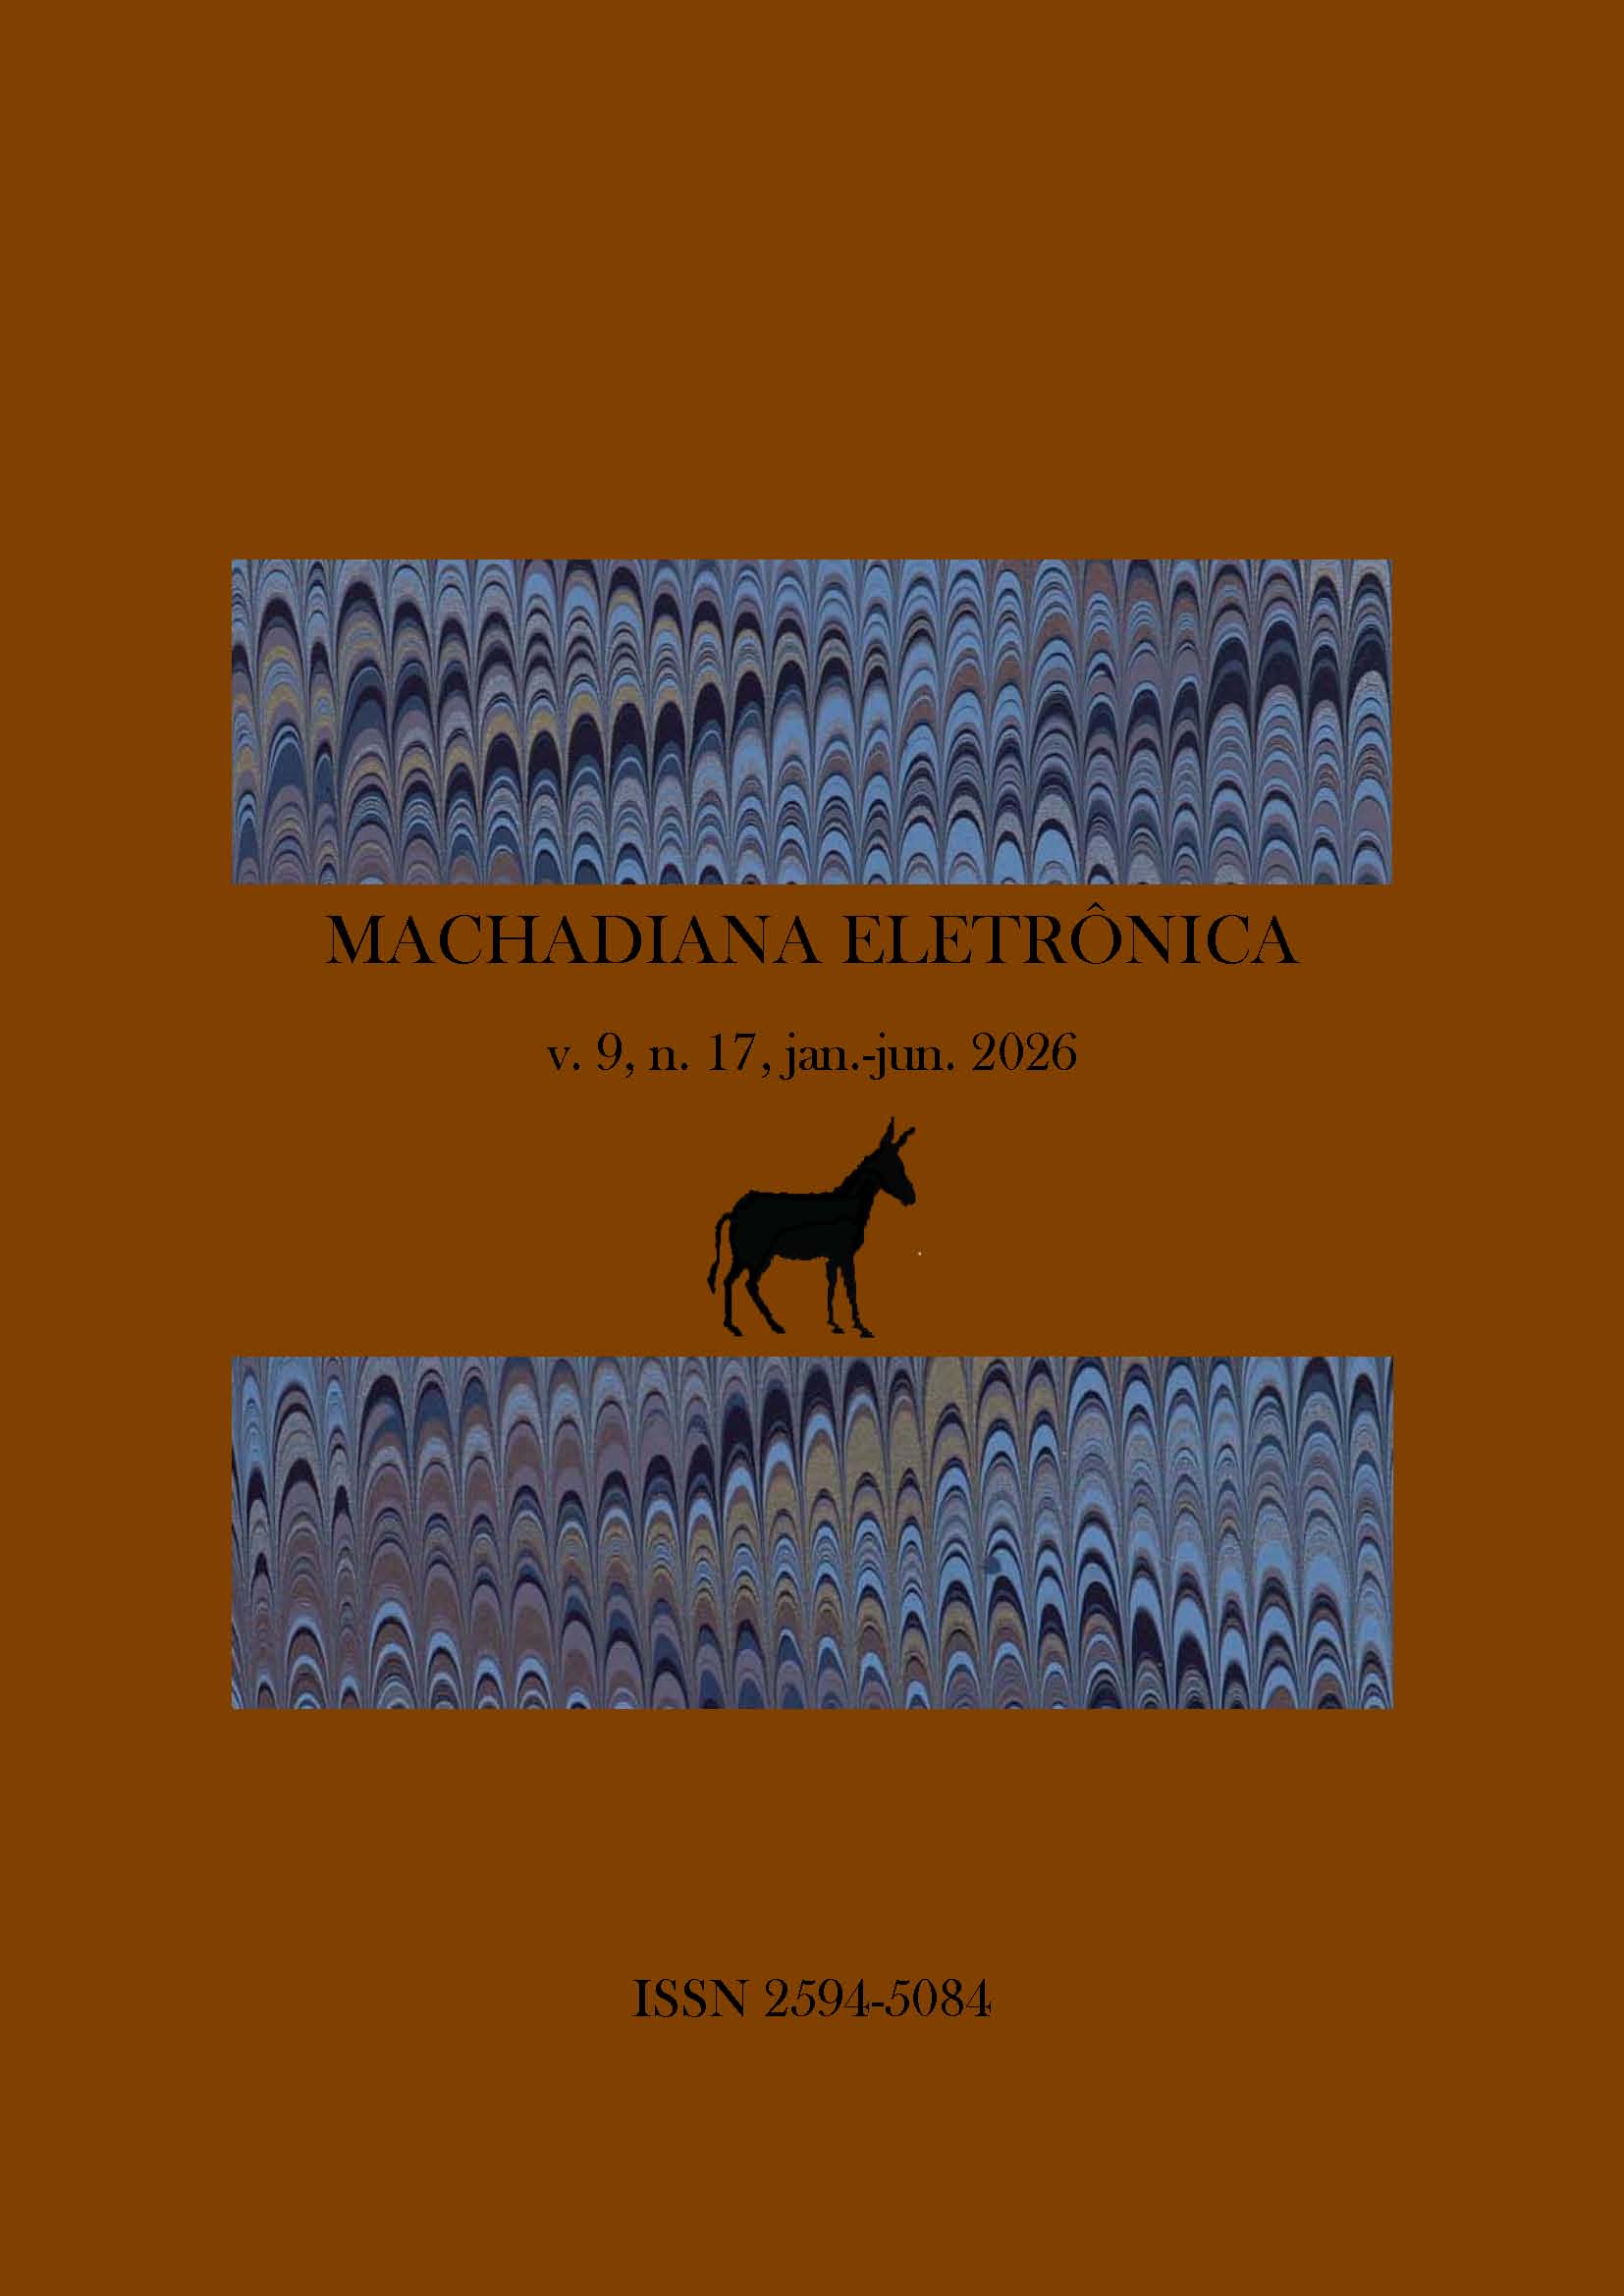 					Visualizar v. 9 n. 17 (2026): Machadiana Eletrônica (Ahead of Print)
				